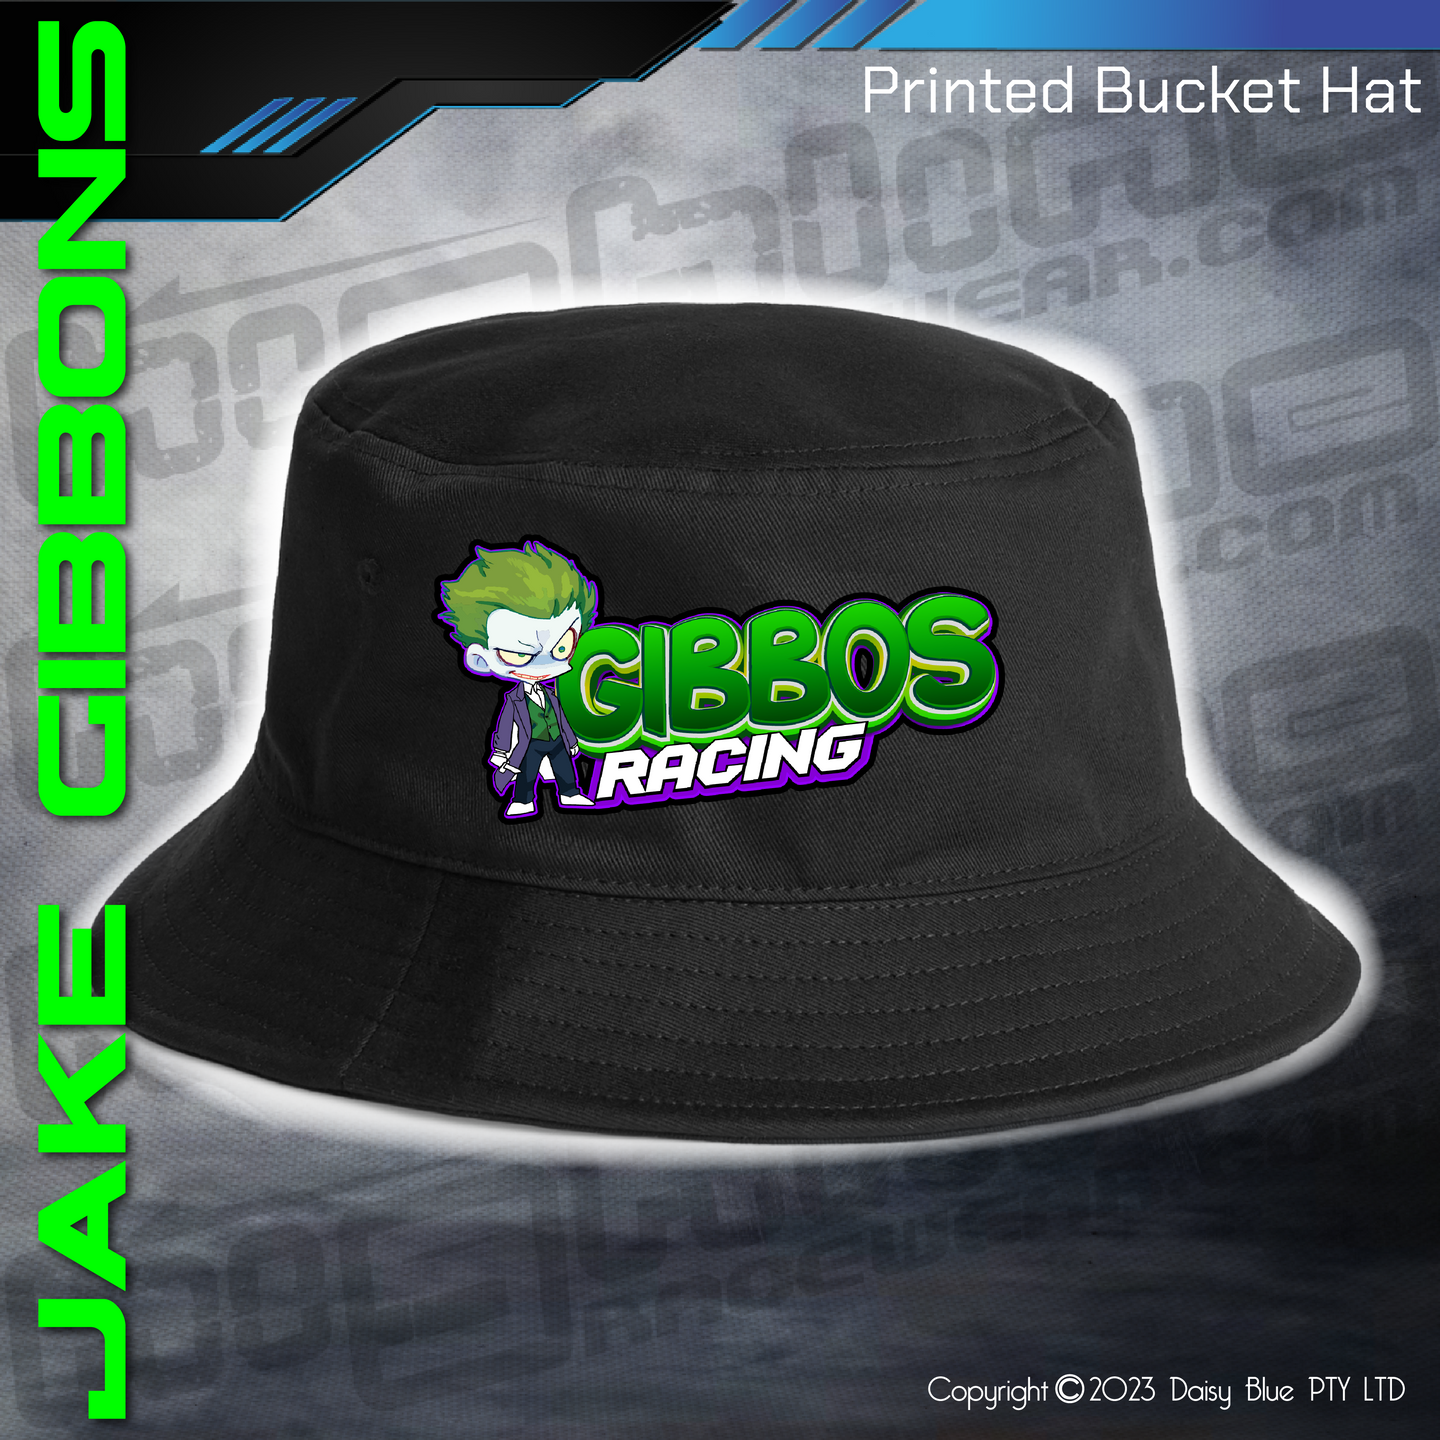 Printed Bucket Hat - Jake Gibbons